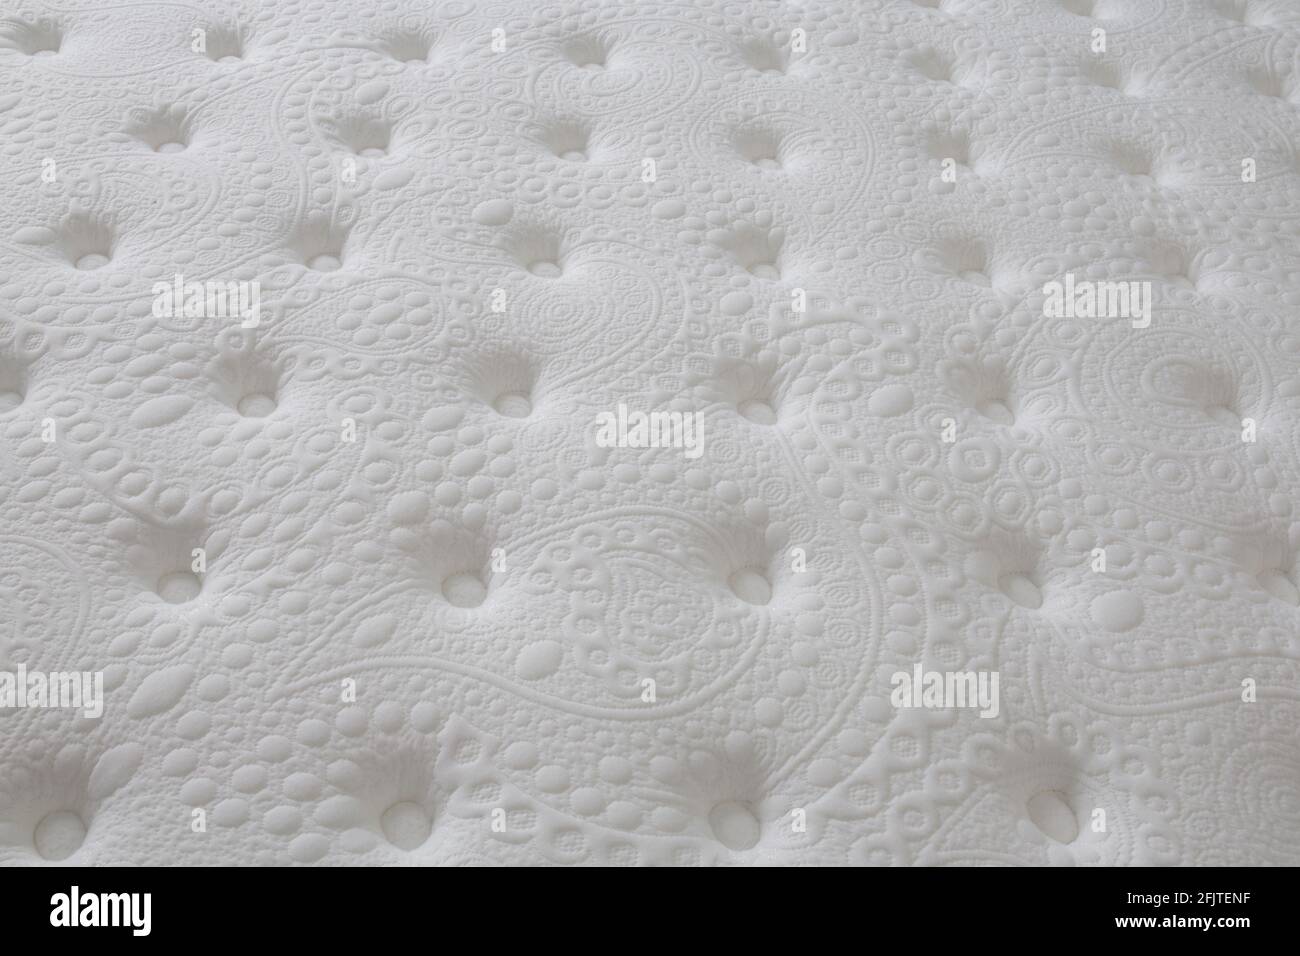 closeup of pattern on the white mattress, beautiful texture and background Stock Photo